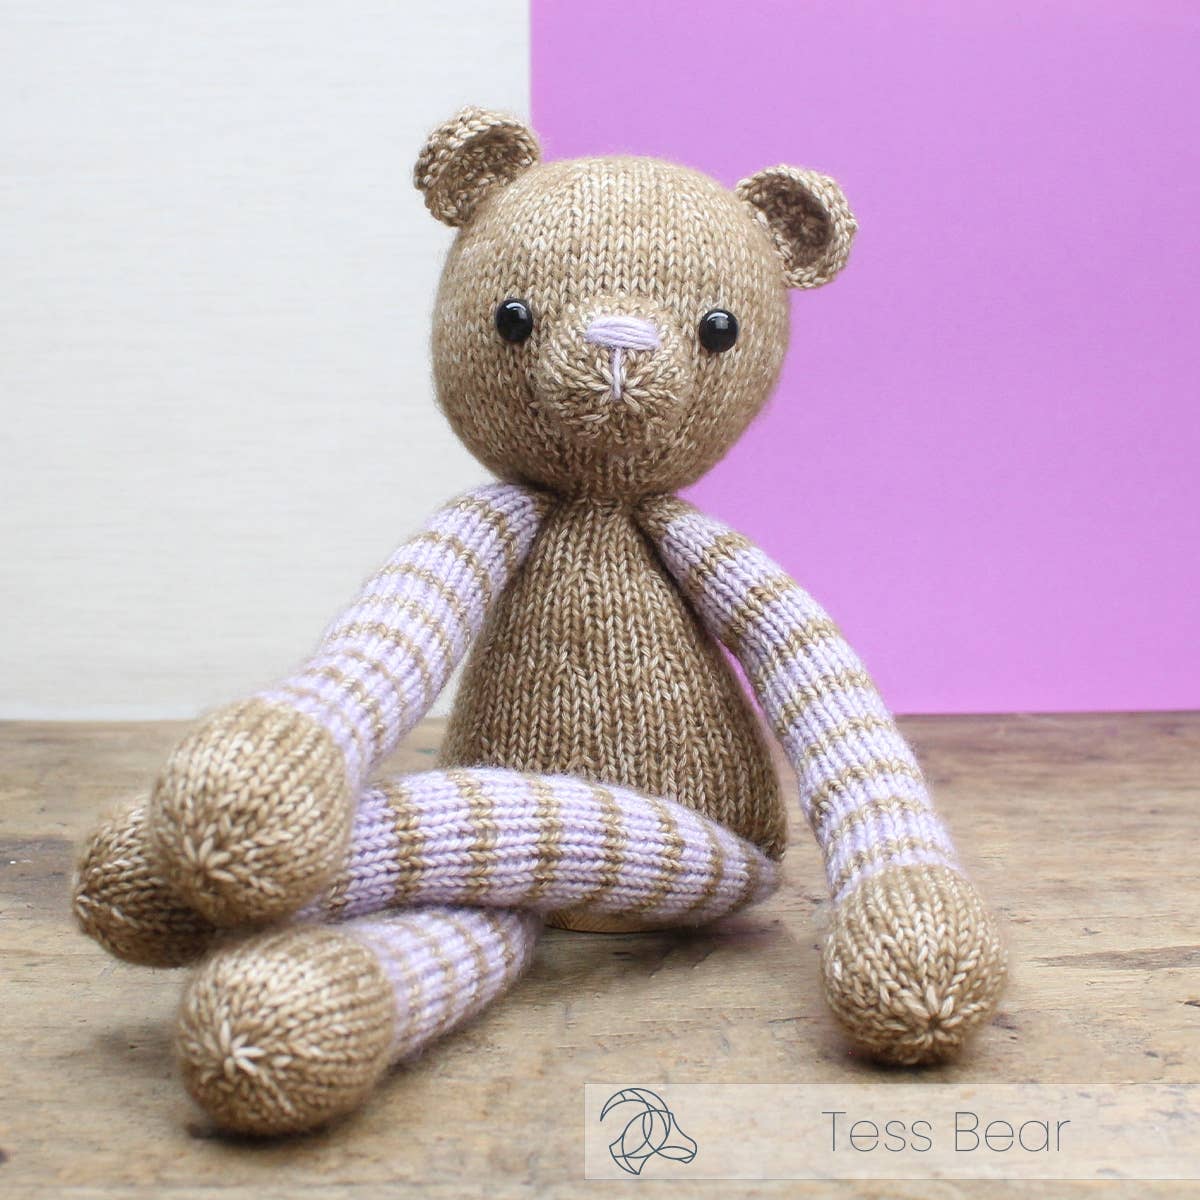 Hardicraft - Tess Bear - Knitting Kit